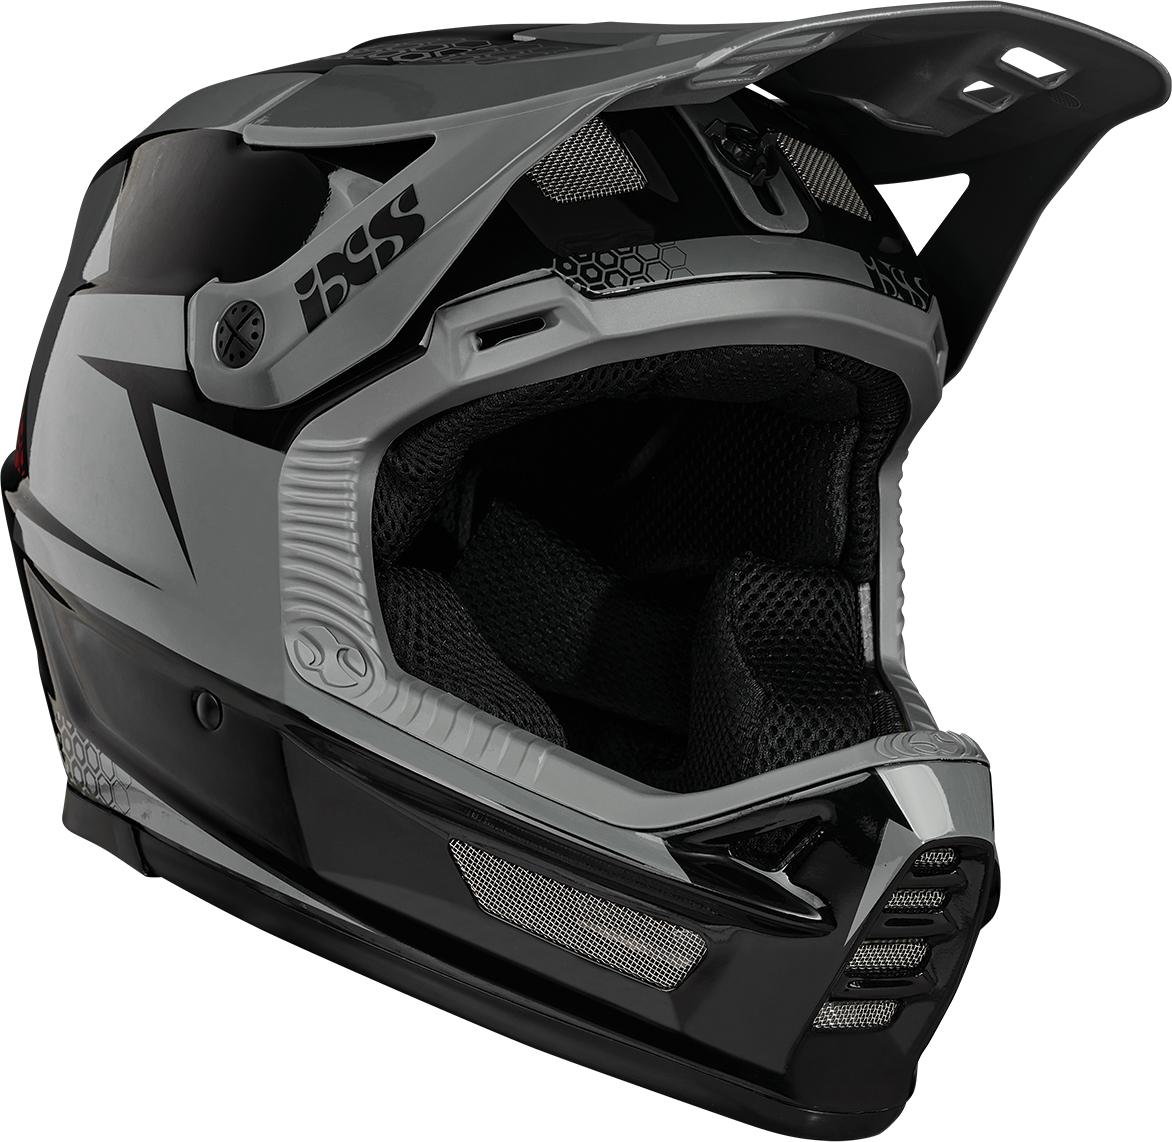 Ixs Xult Dh Ff Helmet - Black/graphite